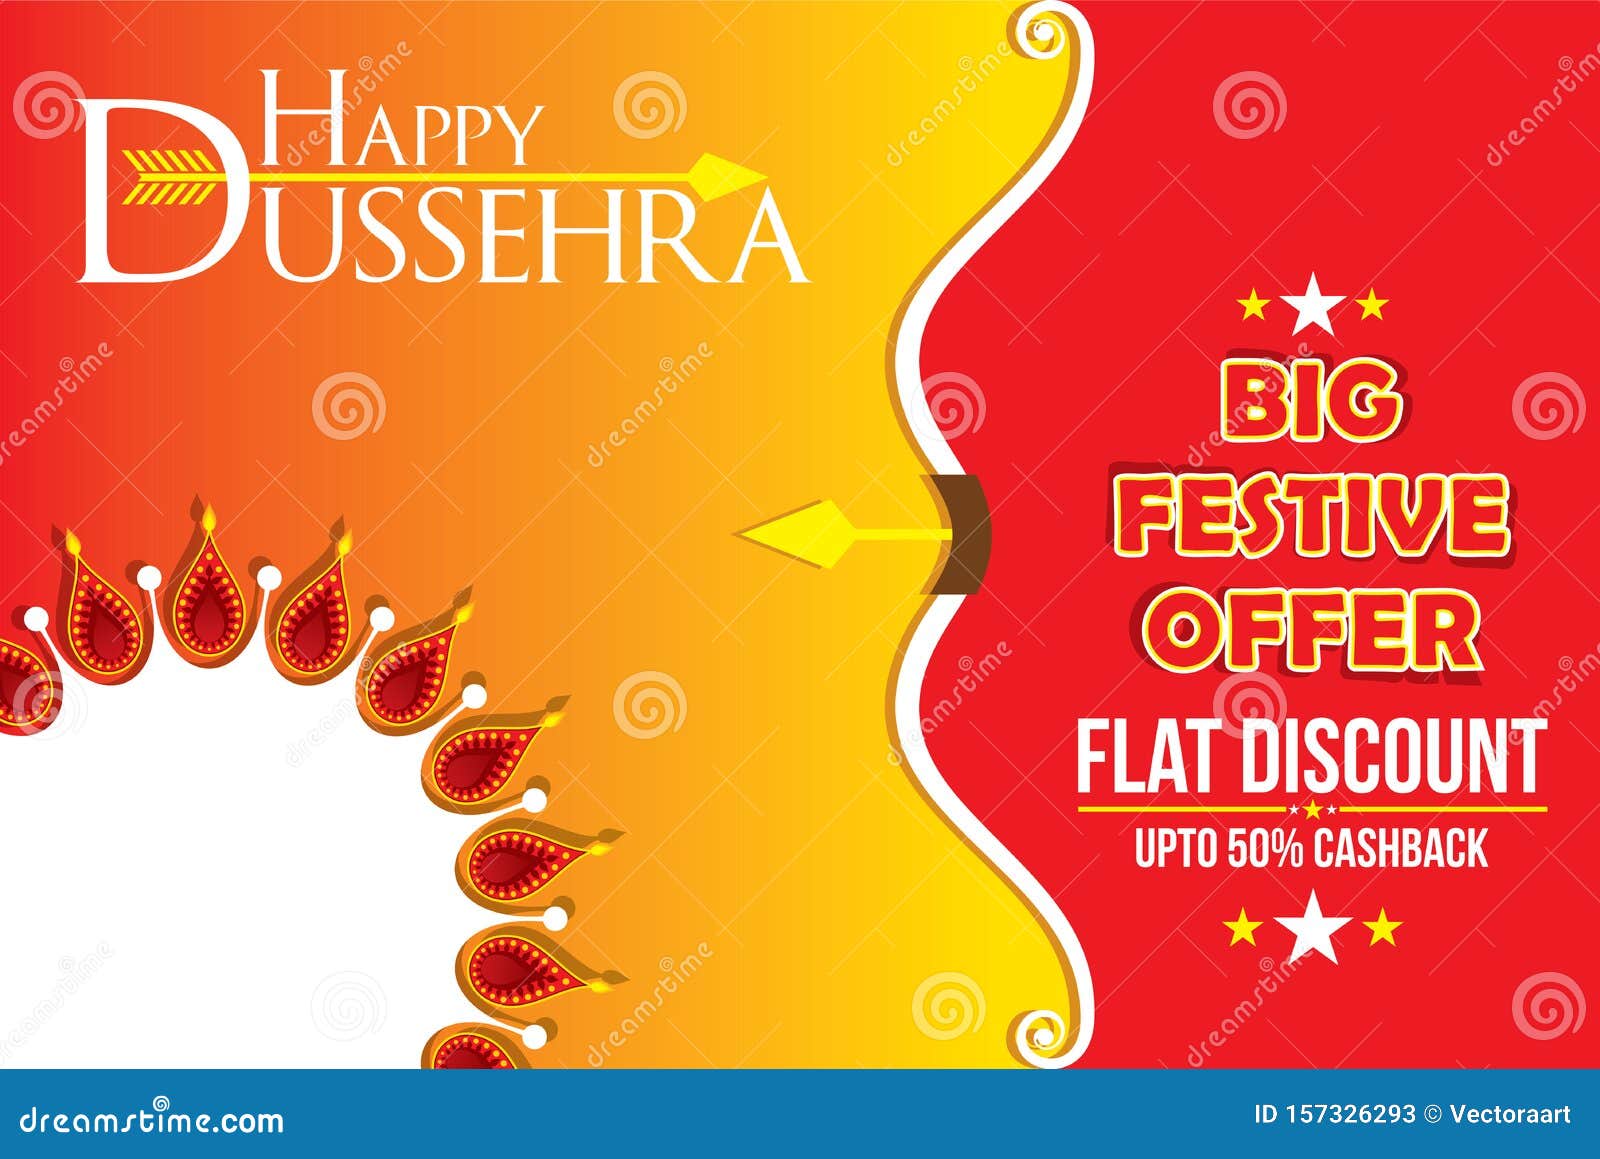 Happy Dussehra Festival Poster Design Stock Vector - Illustration ...